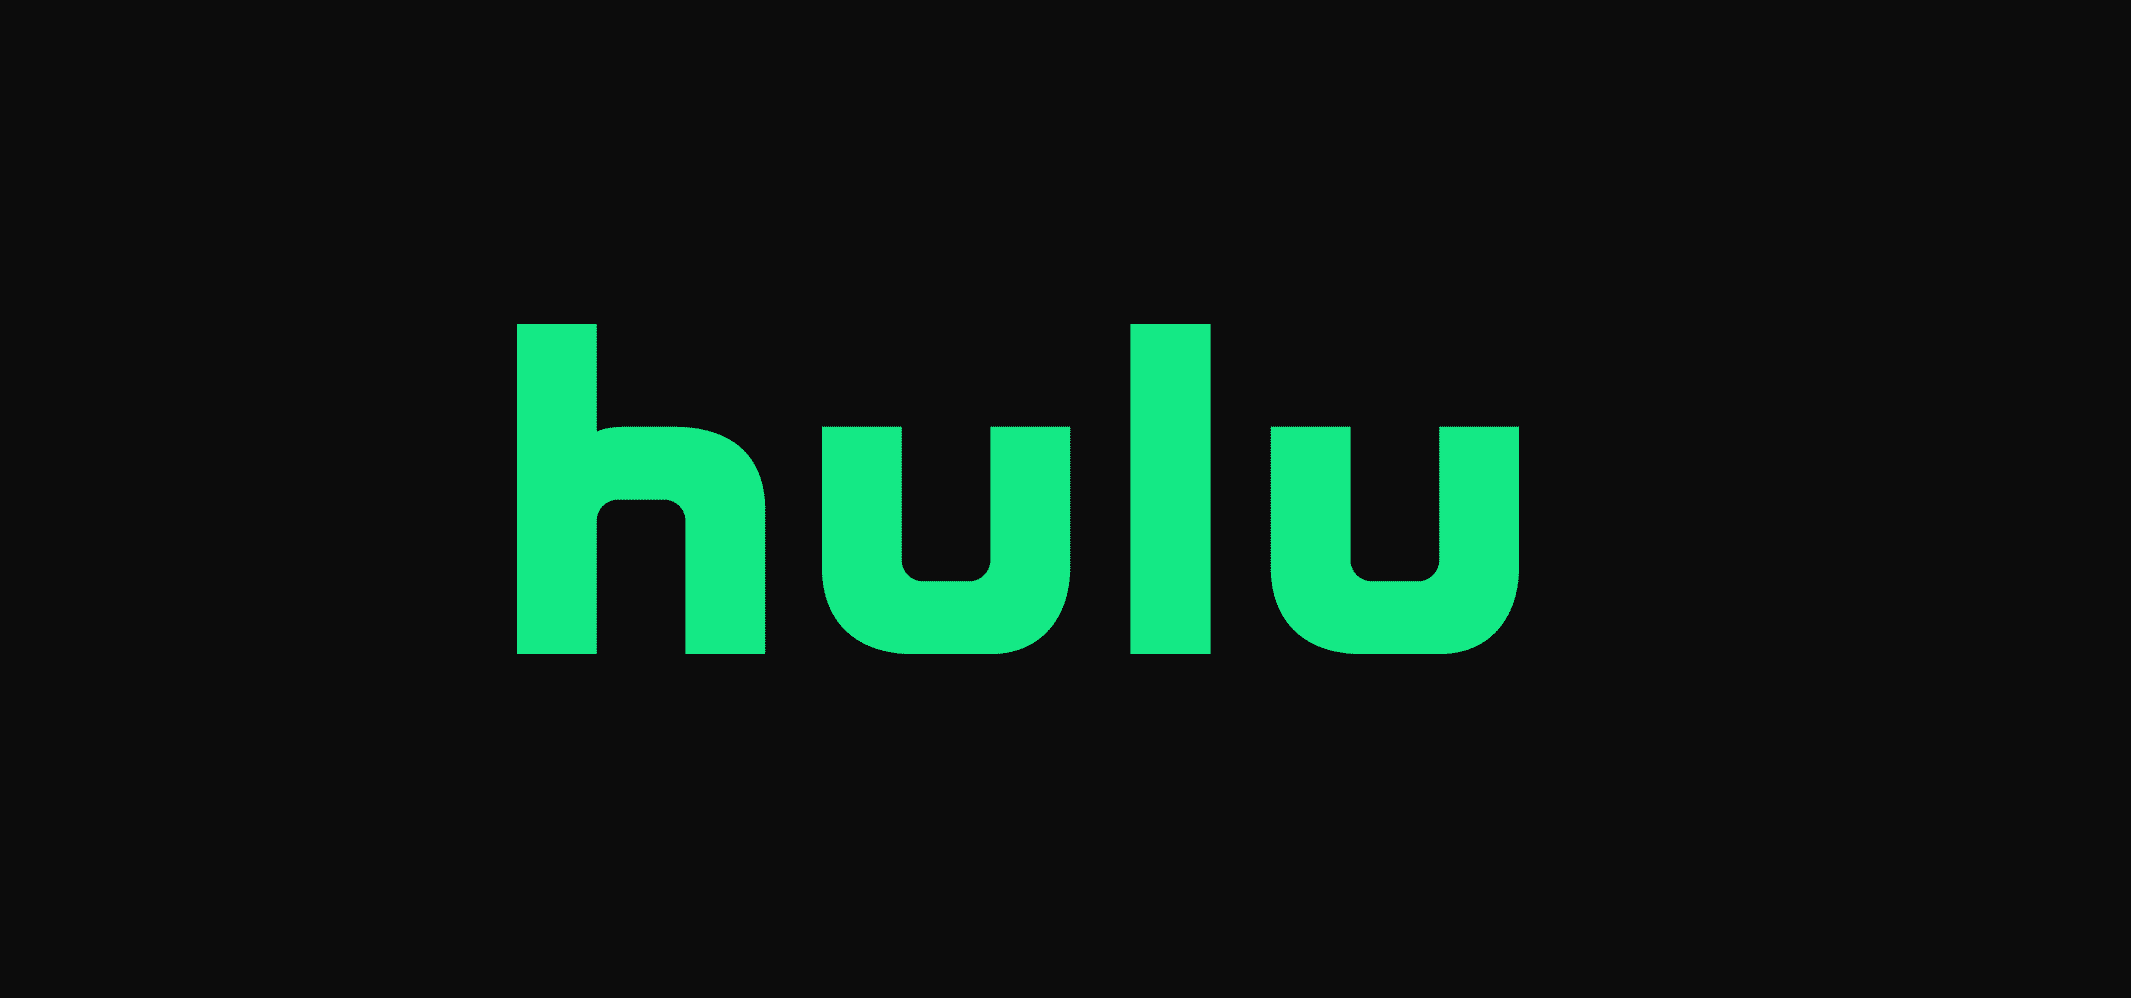 Free Hulu Membership